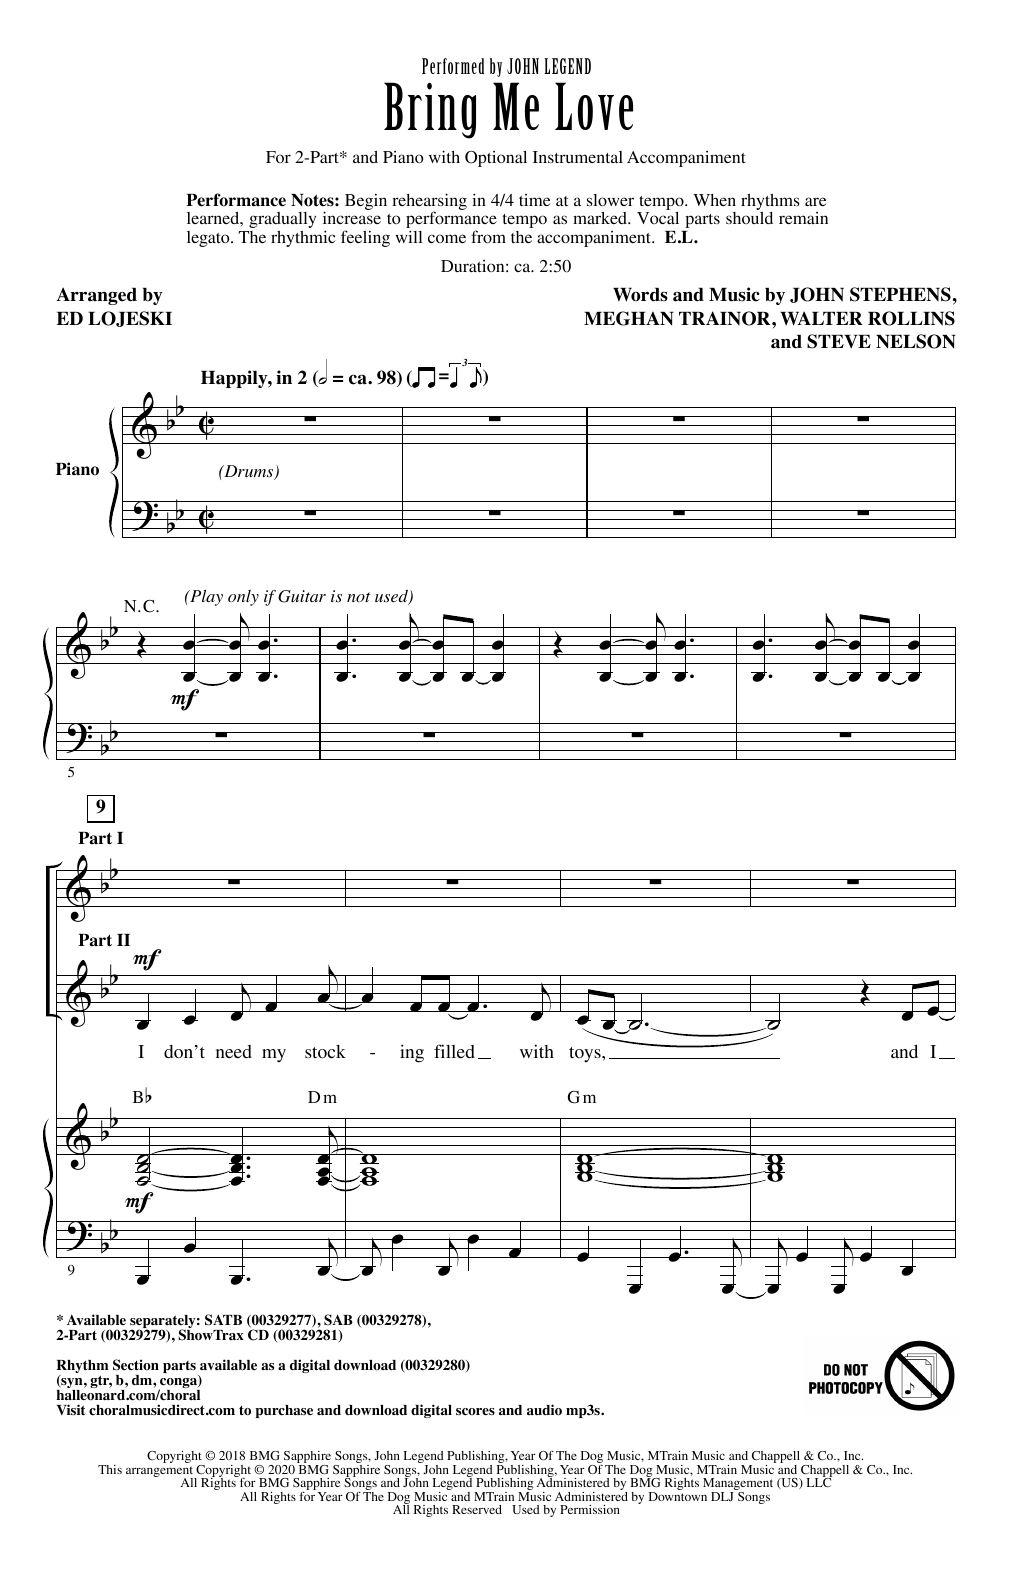 Download John Legend Bring Me Love (arr. Ed Lojeski) Sheet Music and learn how to play SAB Choir PDF digital score in minutes